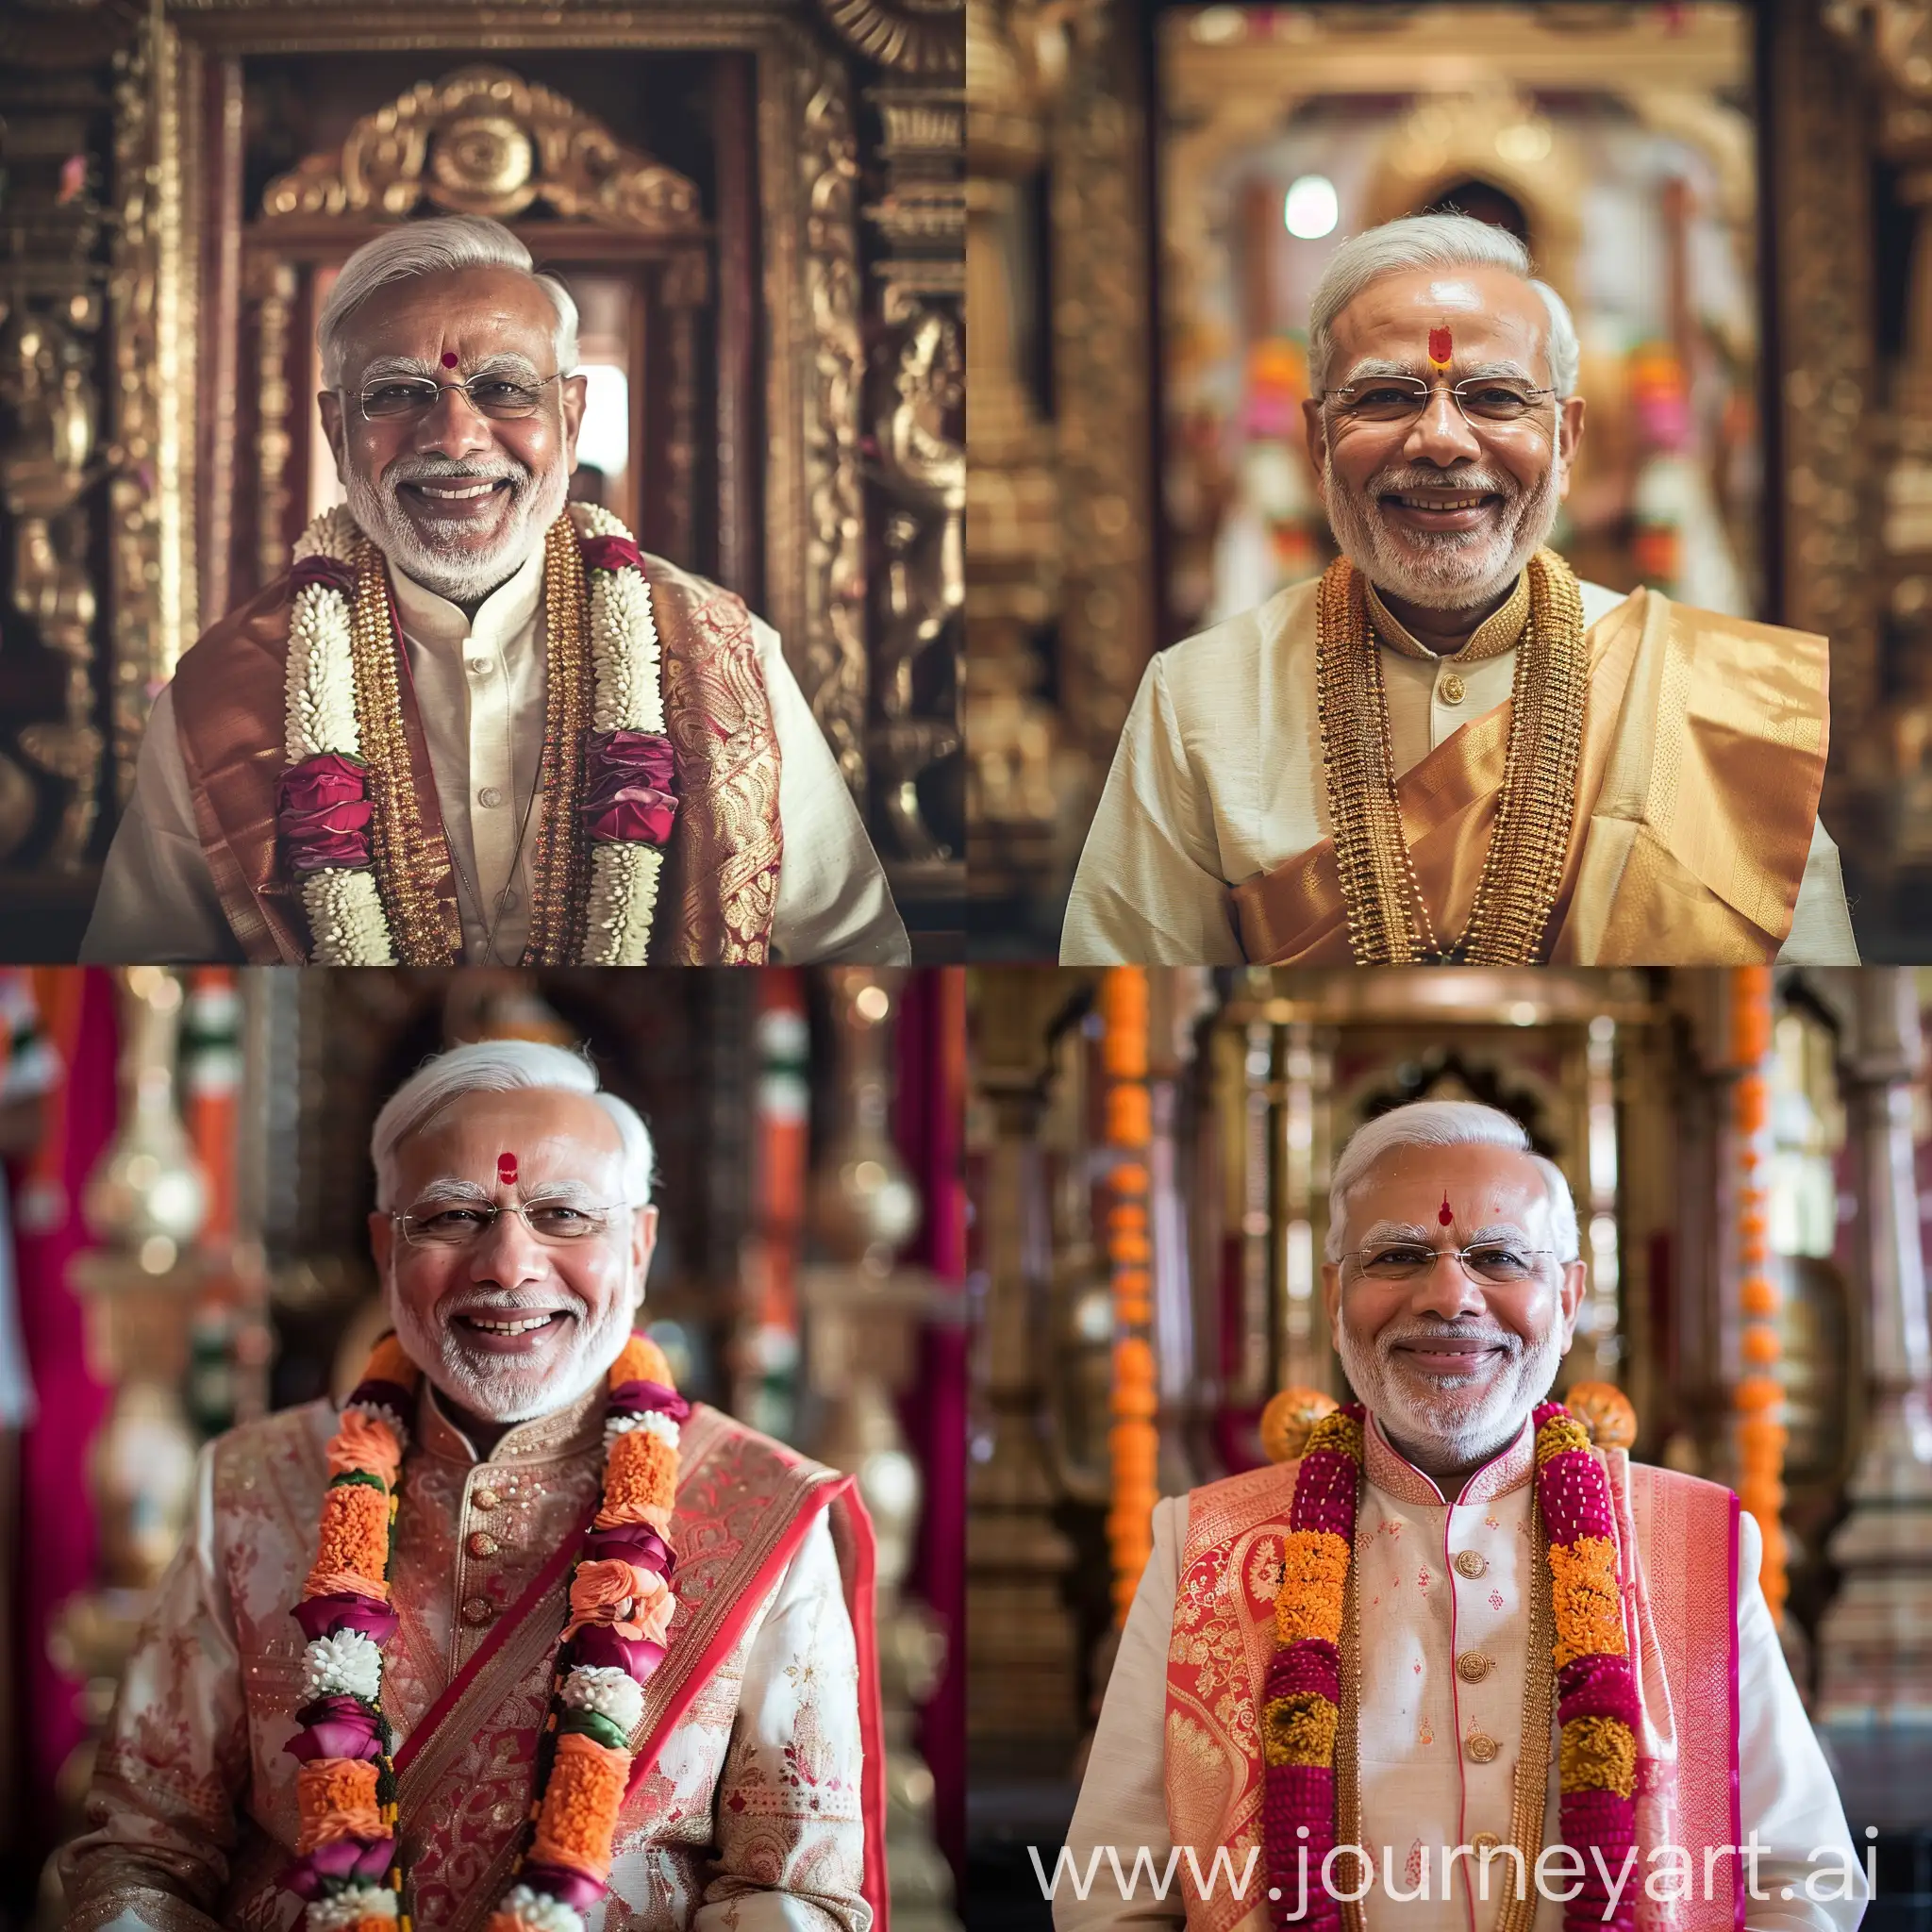 Narendra-Modi-Radiating-Joy-in-Traditional-Hindu-Attire-at-a-Serene-Temple